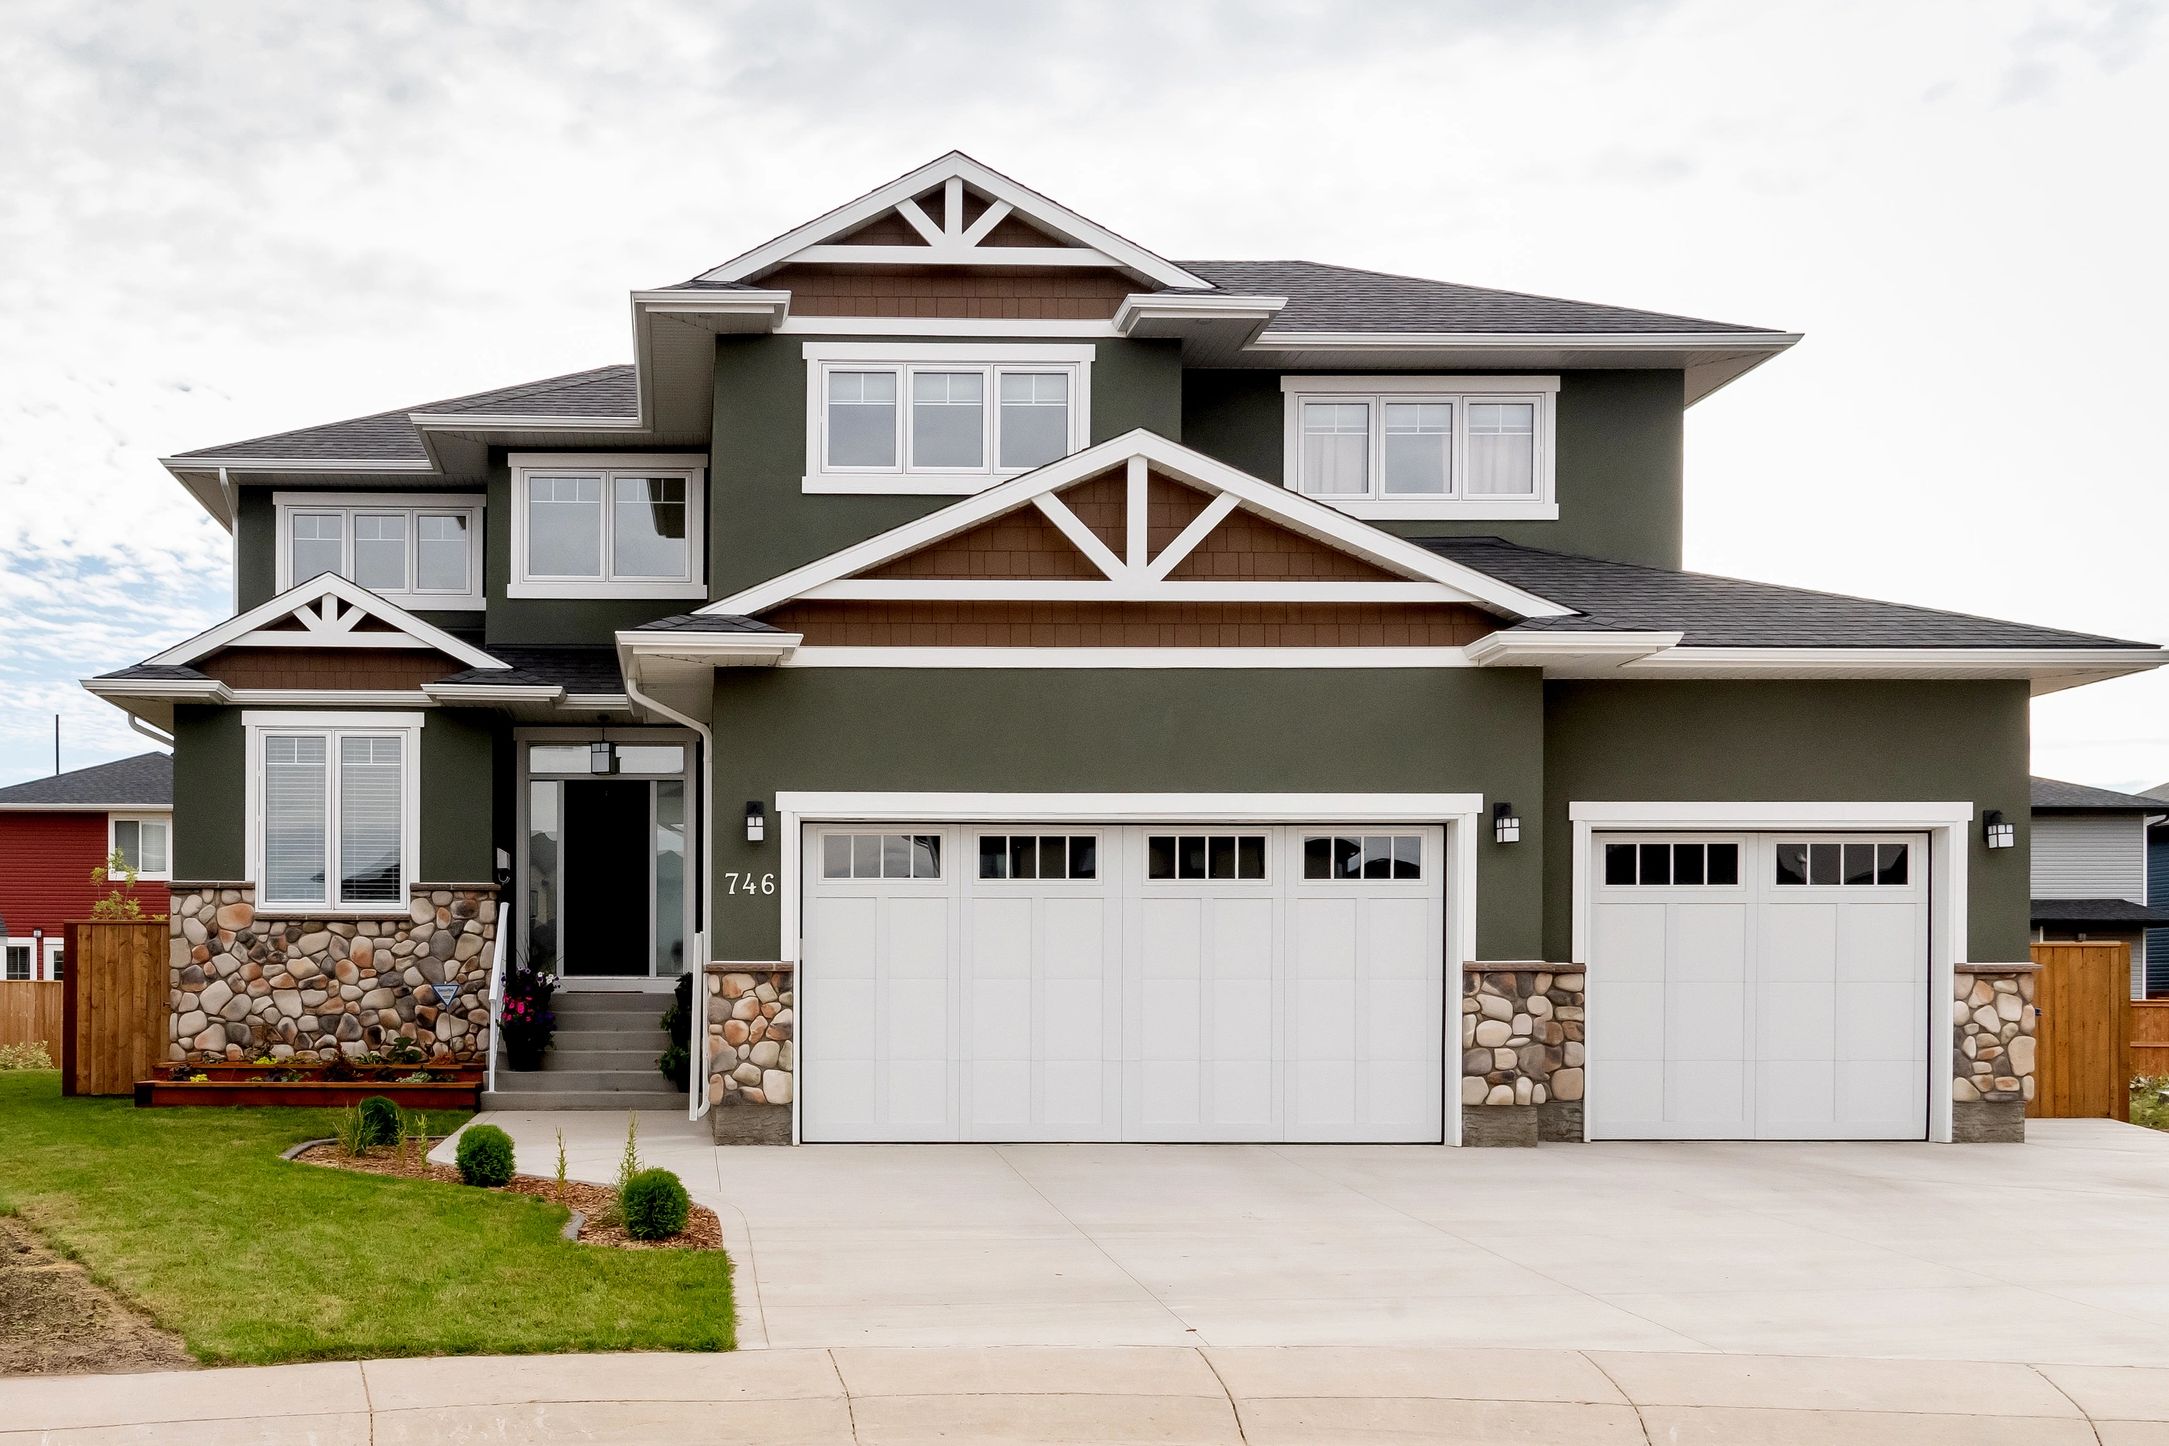 Legacy Homes - New Home Construction - Saskatoon - Custom Home Renovation - Beams - Brighton homes